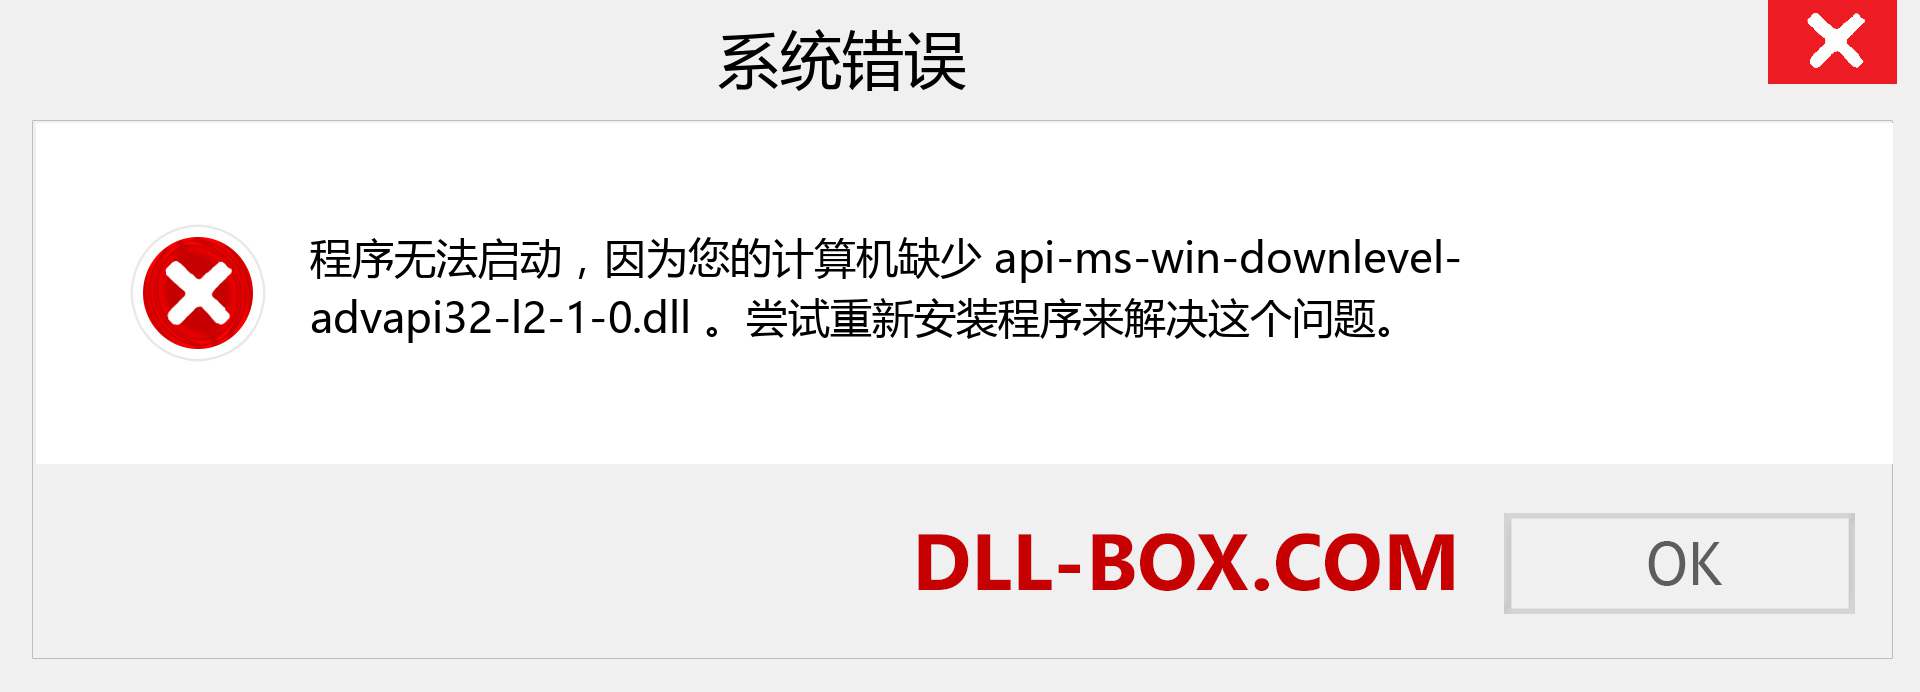 api-ms-win-downlevel-advapi32-l2-1-0.dll 文件丢失？。 适用于 Windows 7、8、10 的下载 - 修复 Windows、照片、图像上的 api-ms-win-downlevel-advapi32-l2-1-0 dll 丢失错误